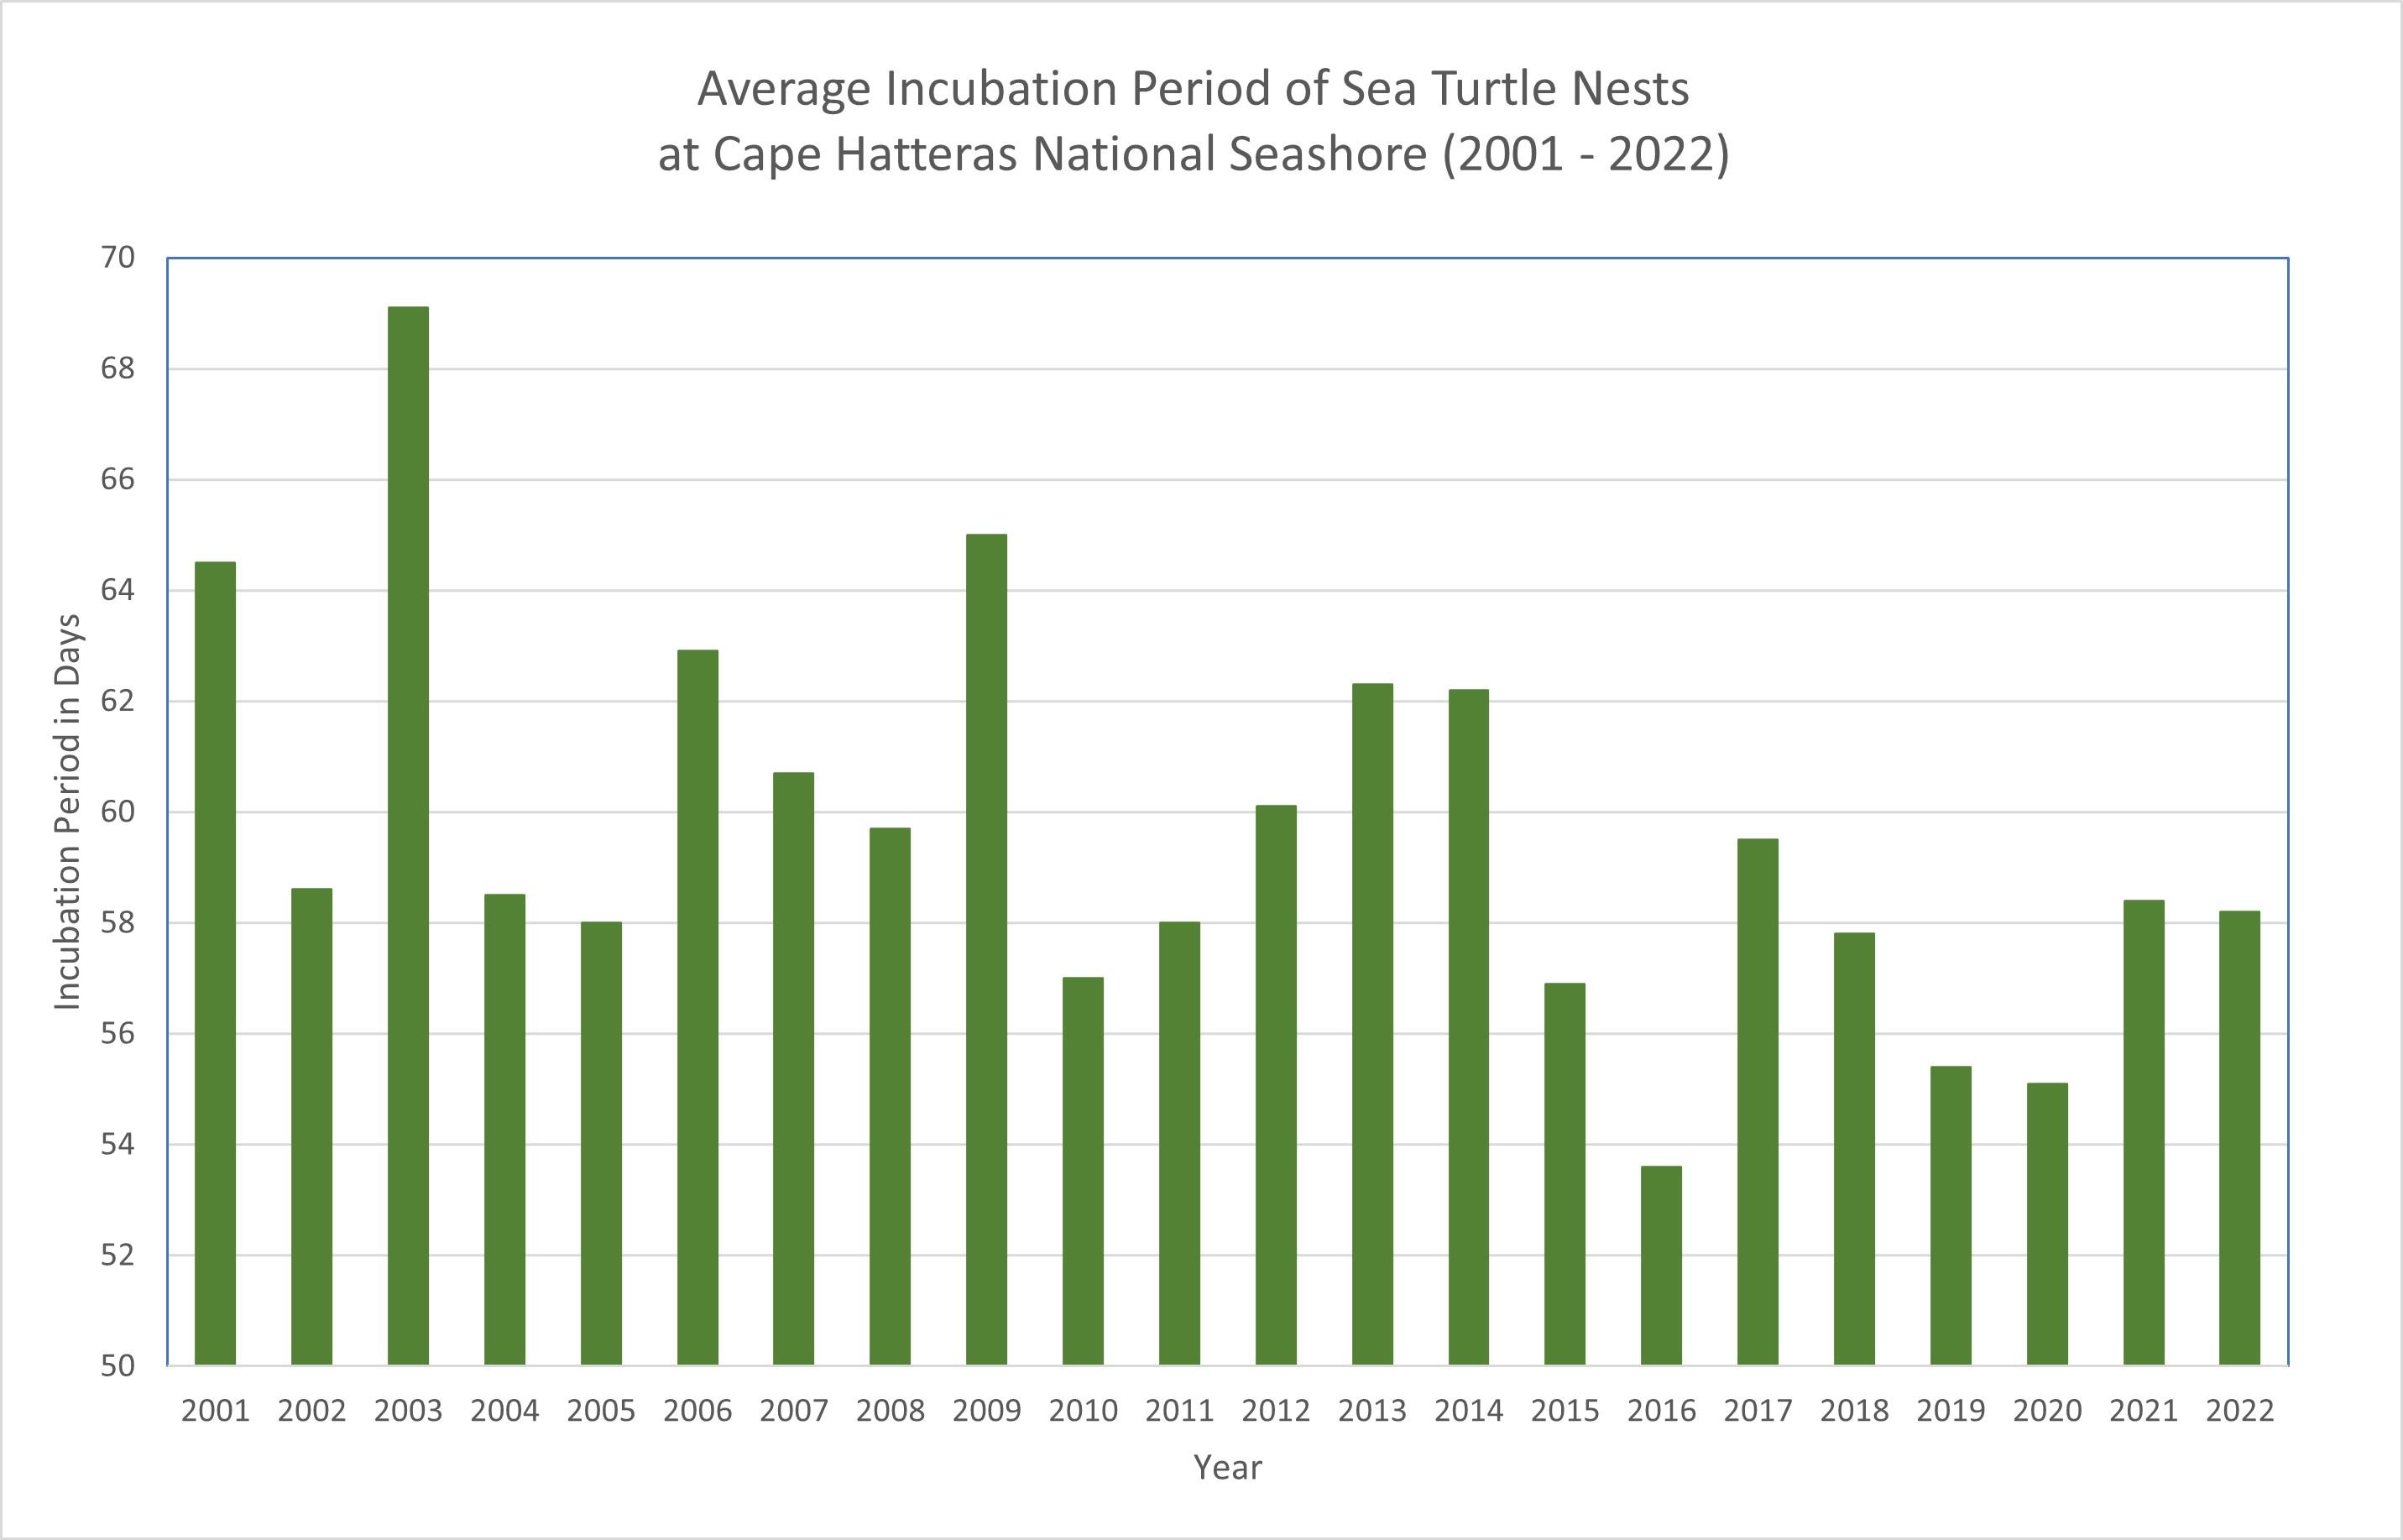 Sea Turtle Incubation Periods at Cape Hatteras